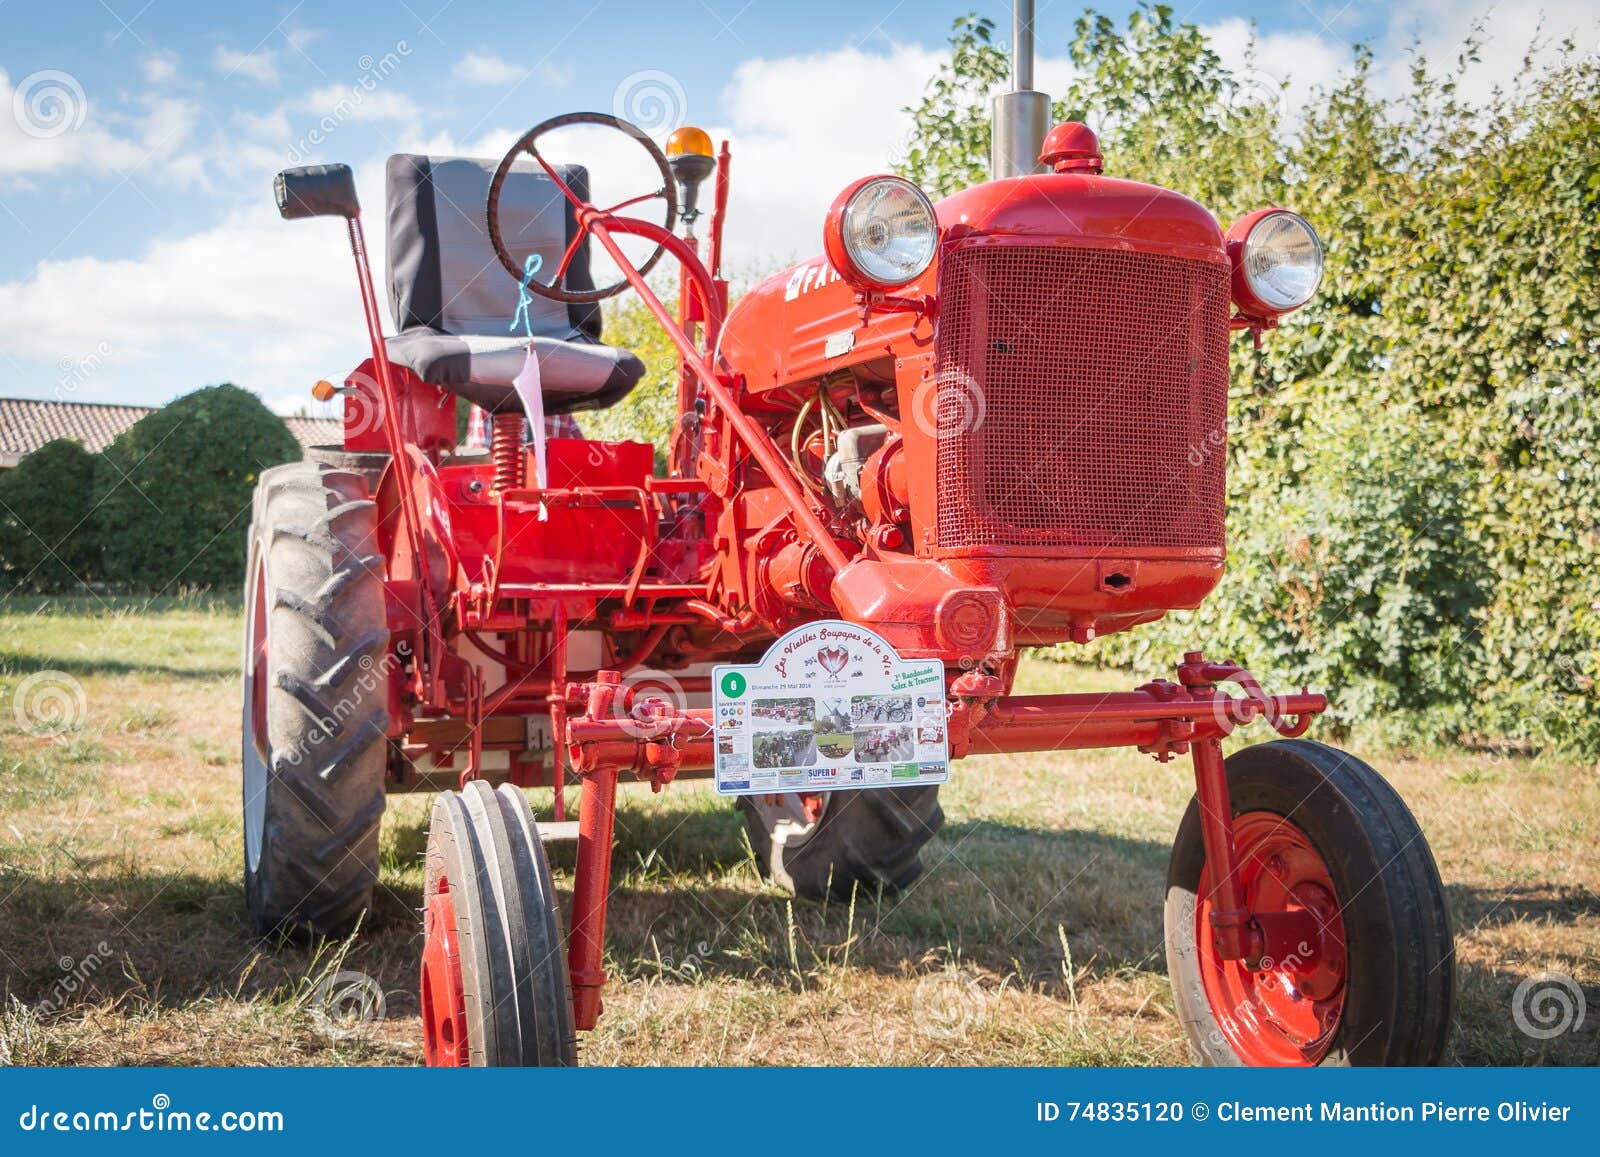 Farm & Garden Craigslist Chicago Tractors